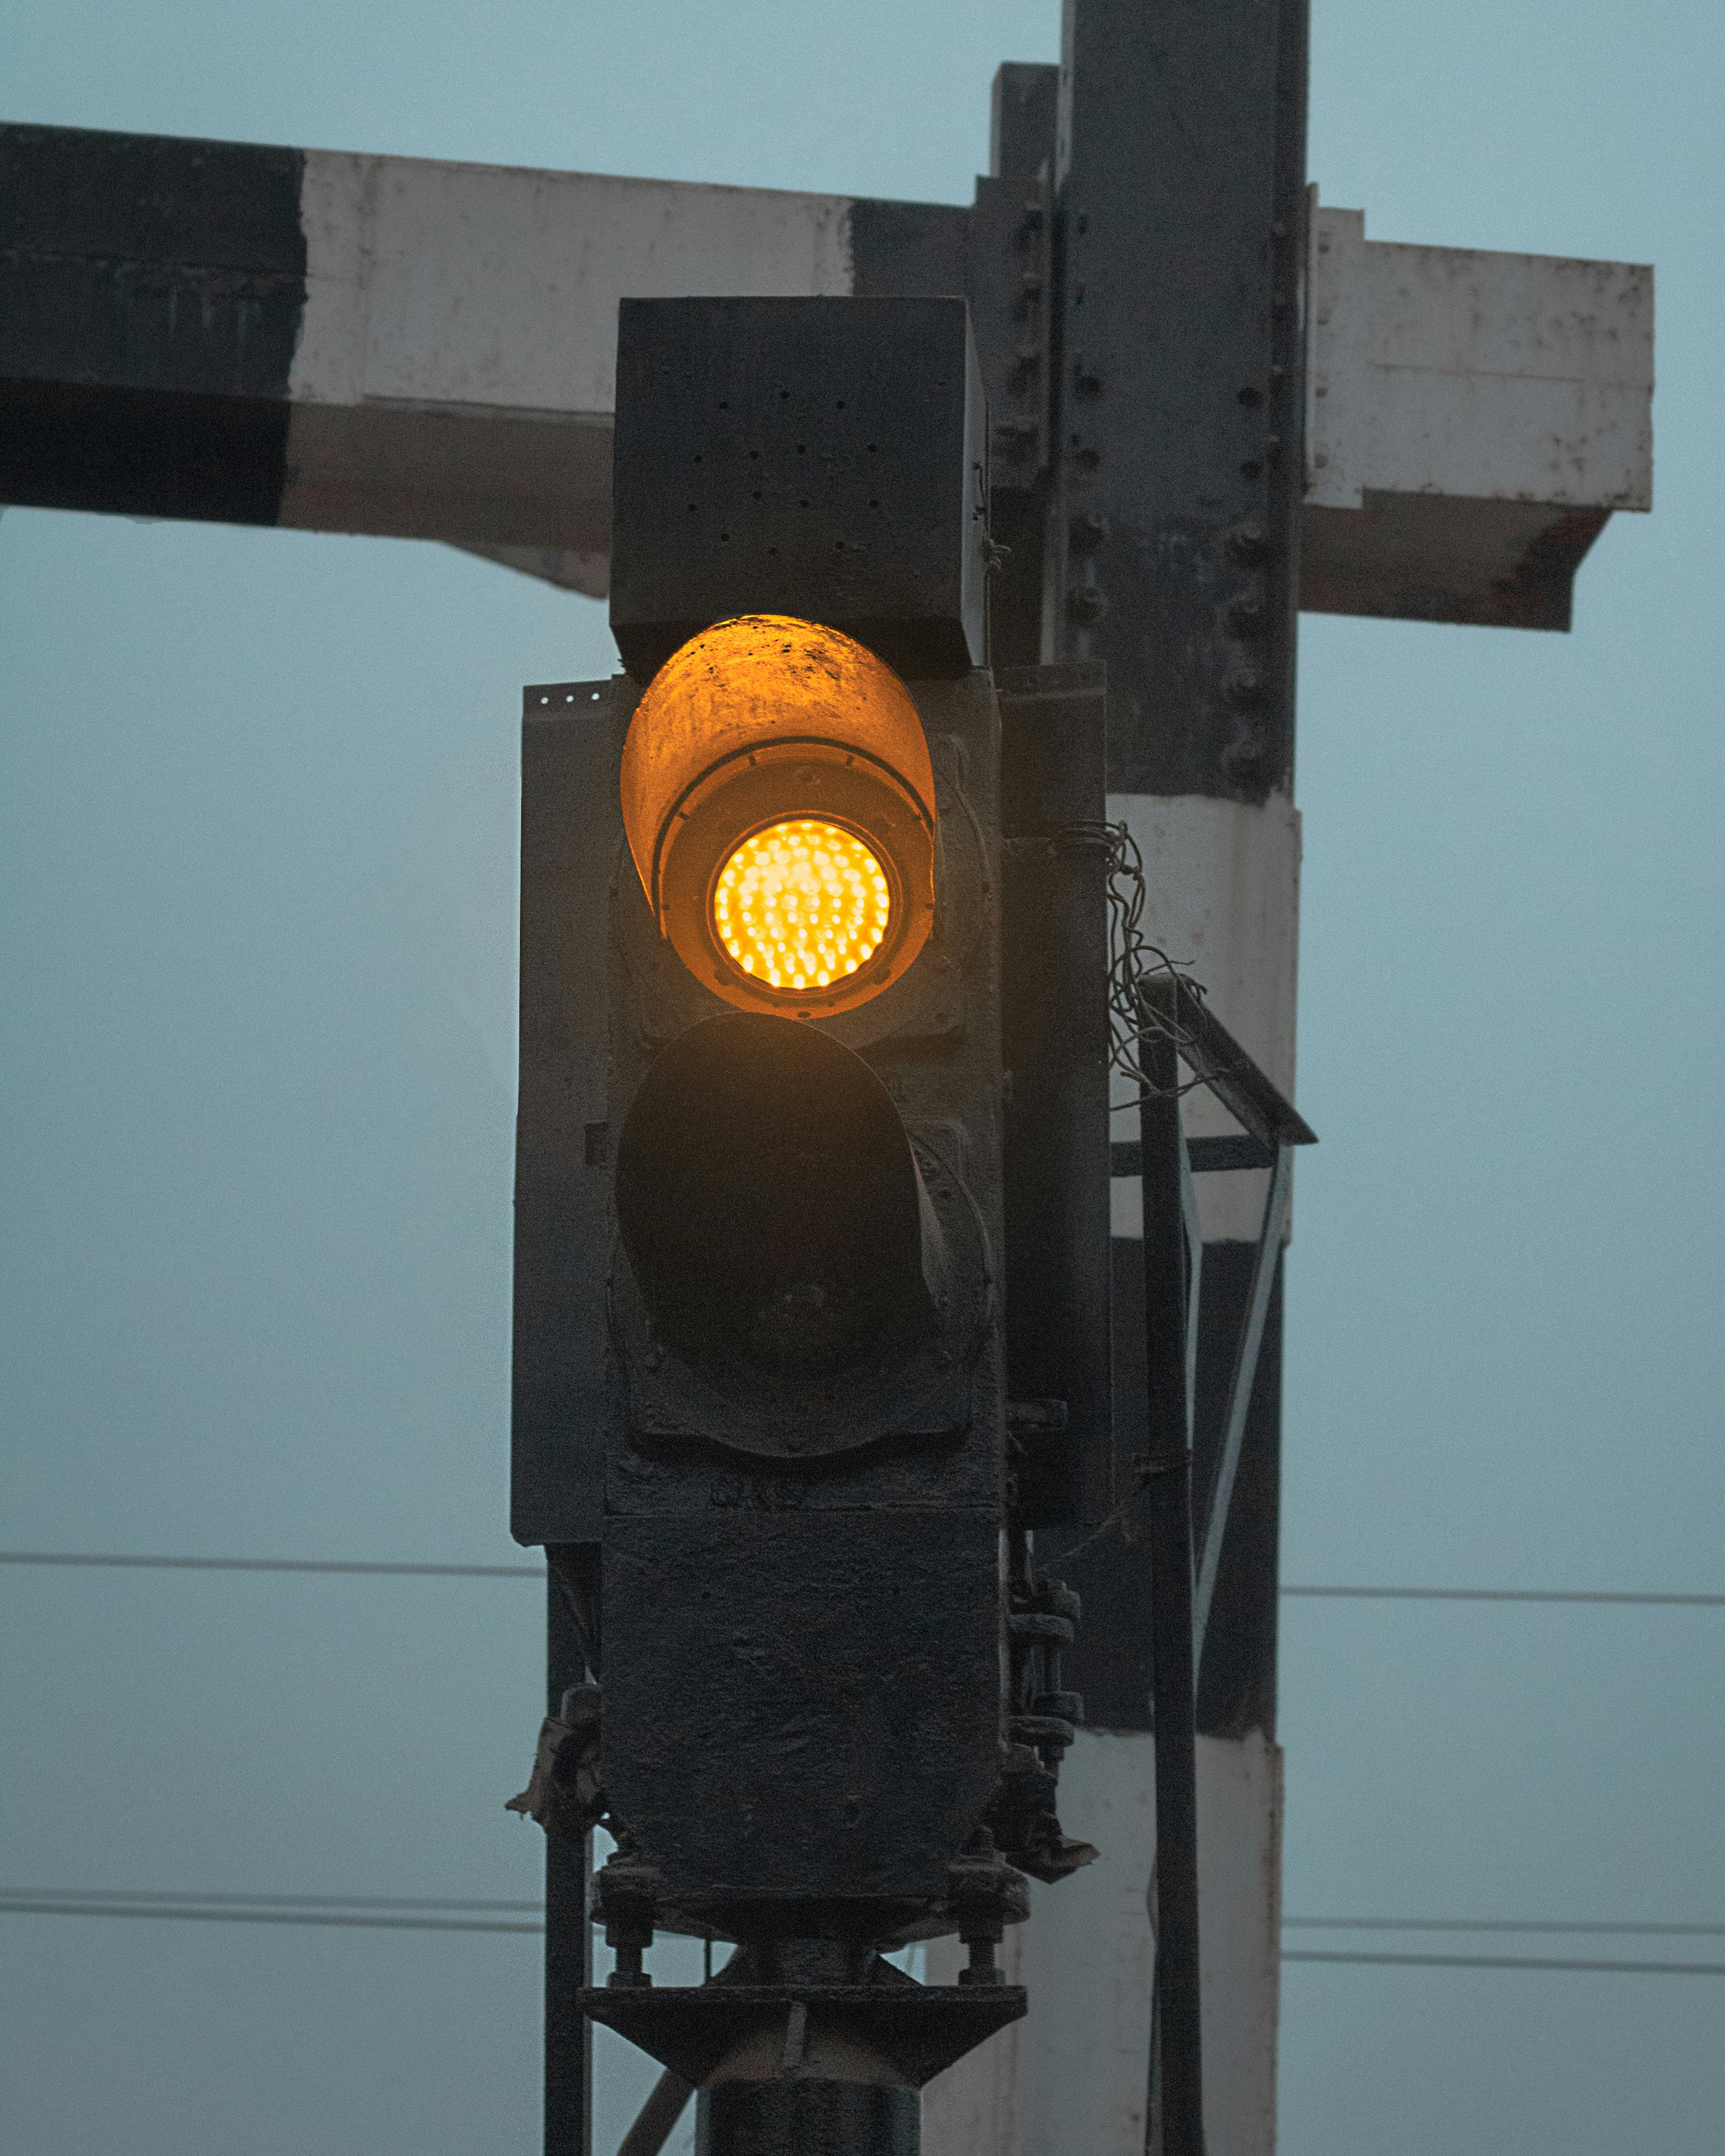 black traffic light turned on during daytime